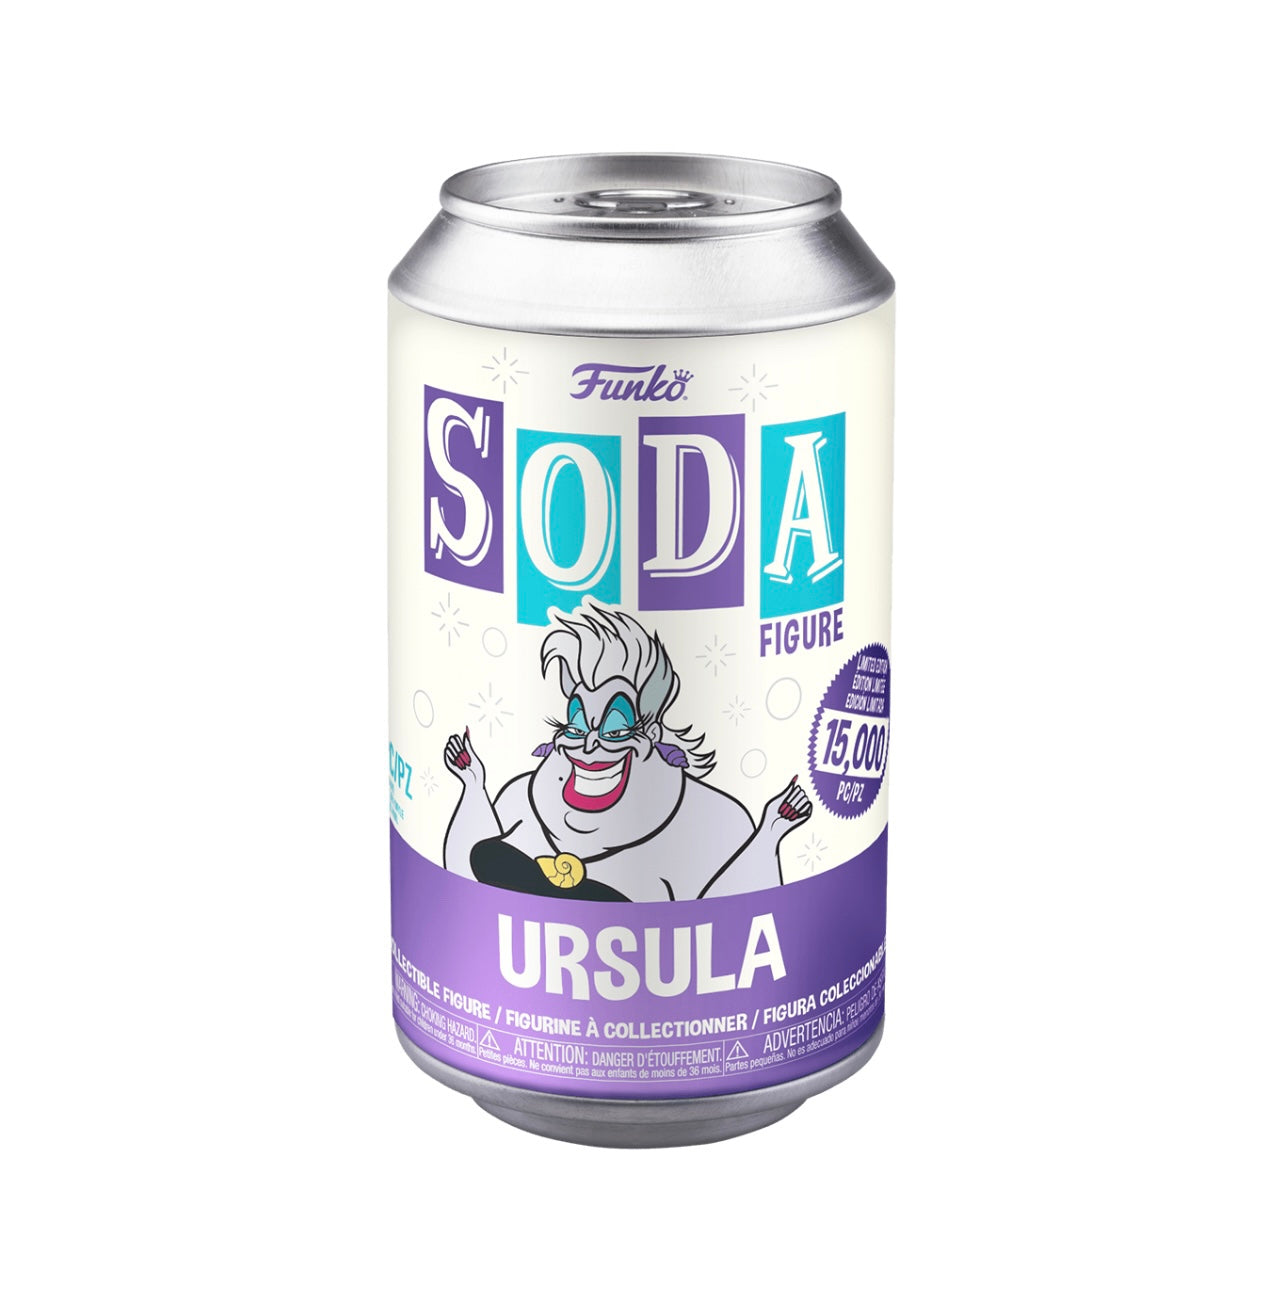 Vinyl Soda Ursula